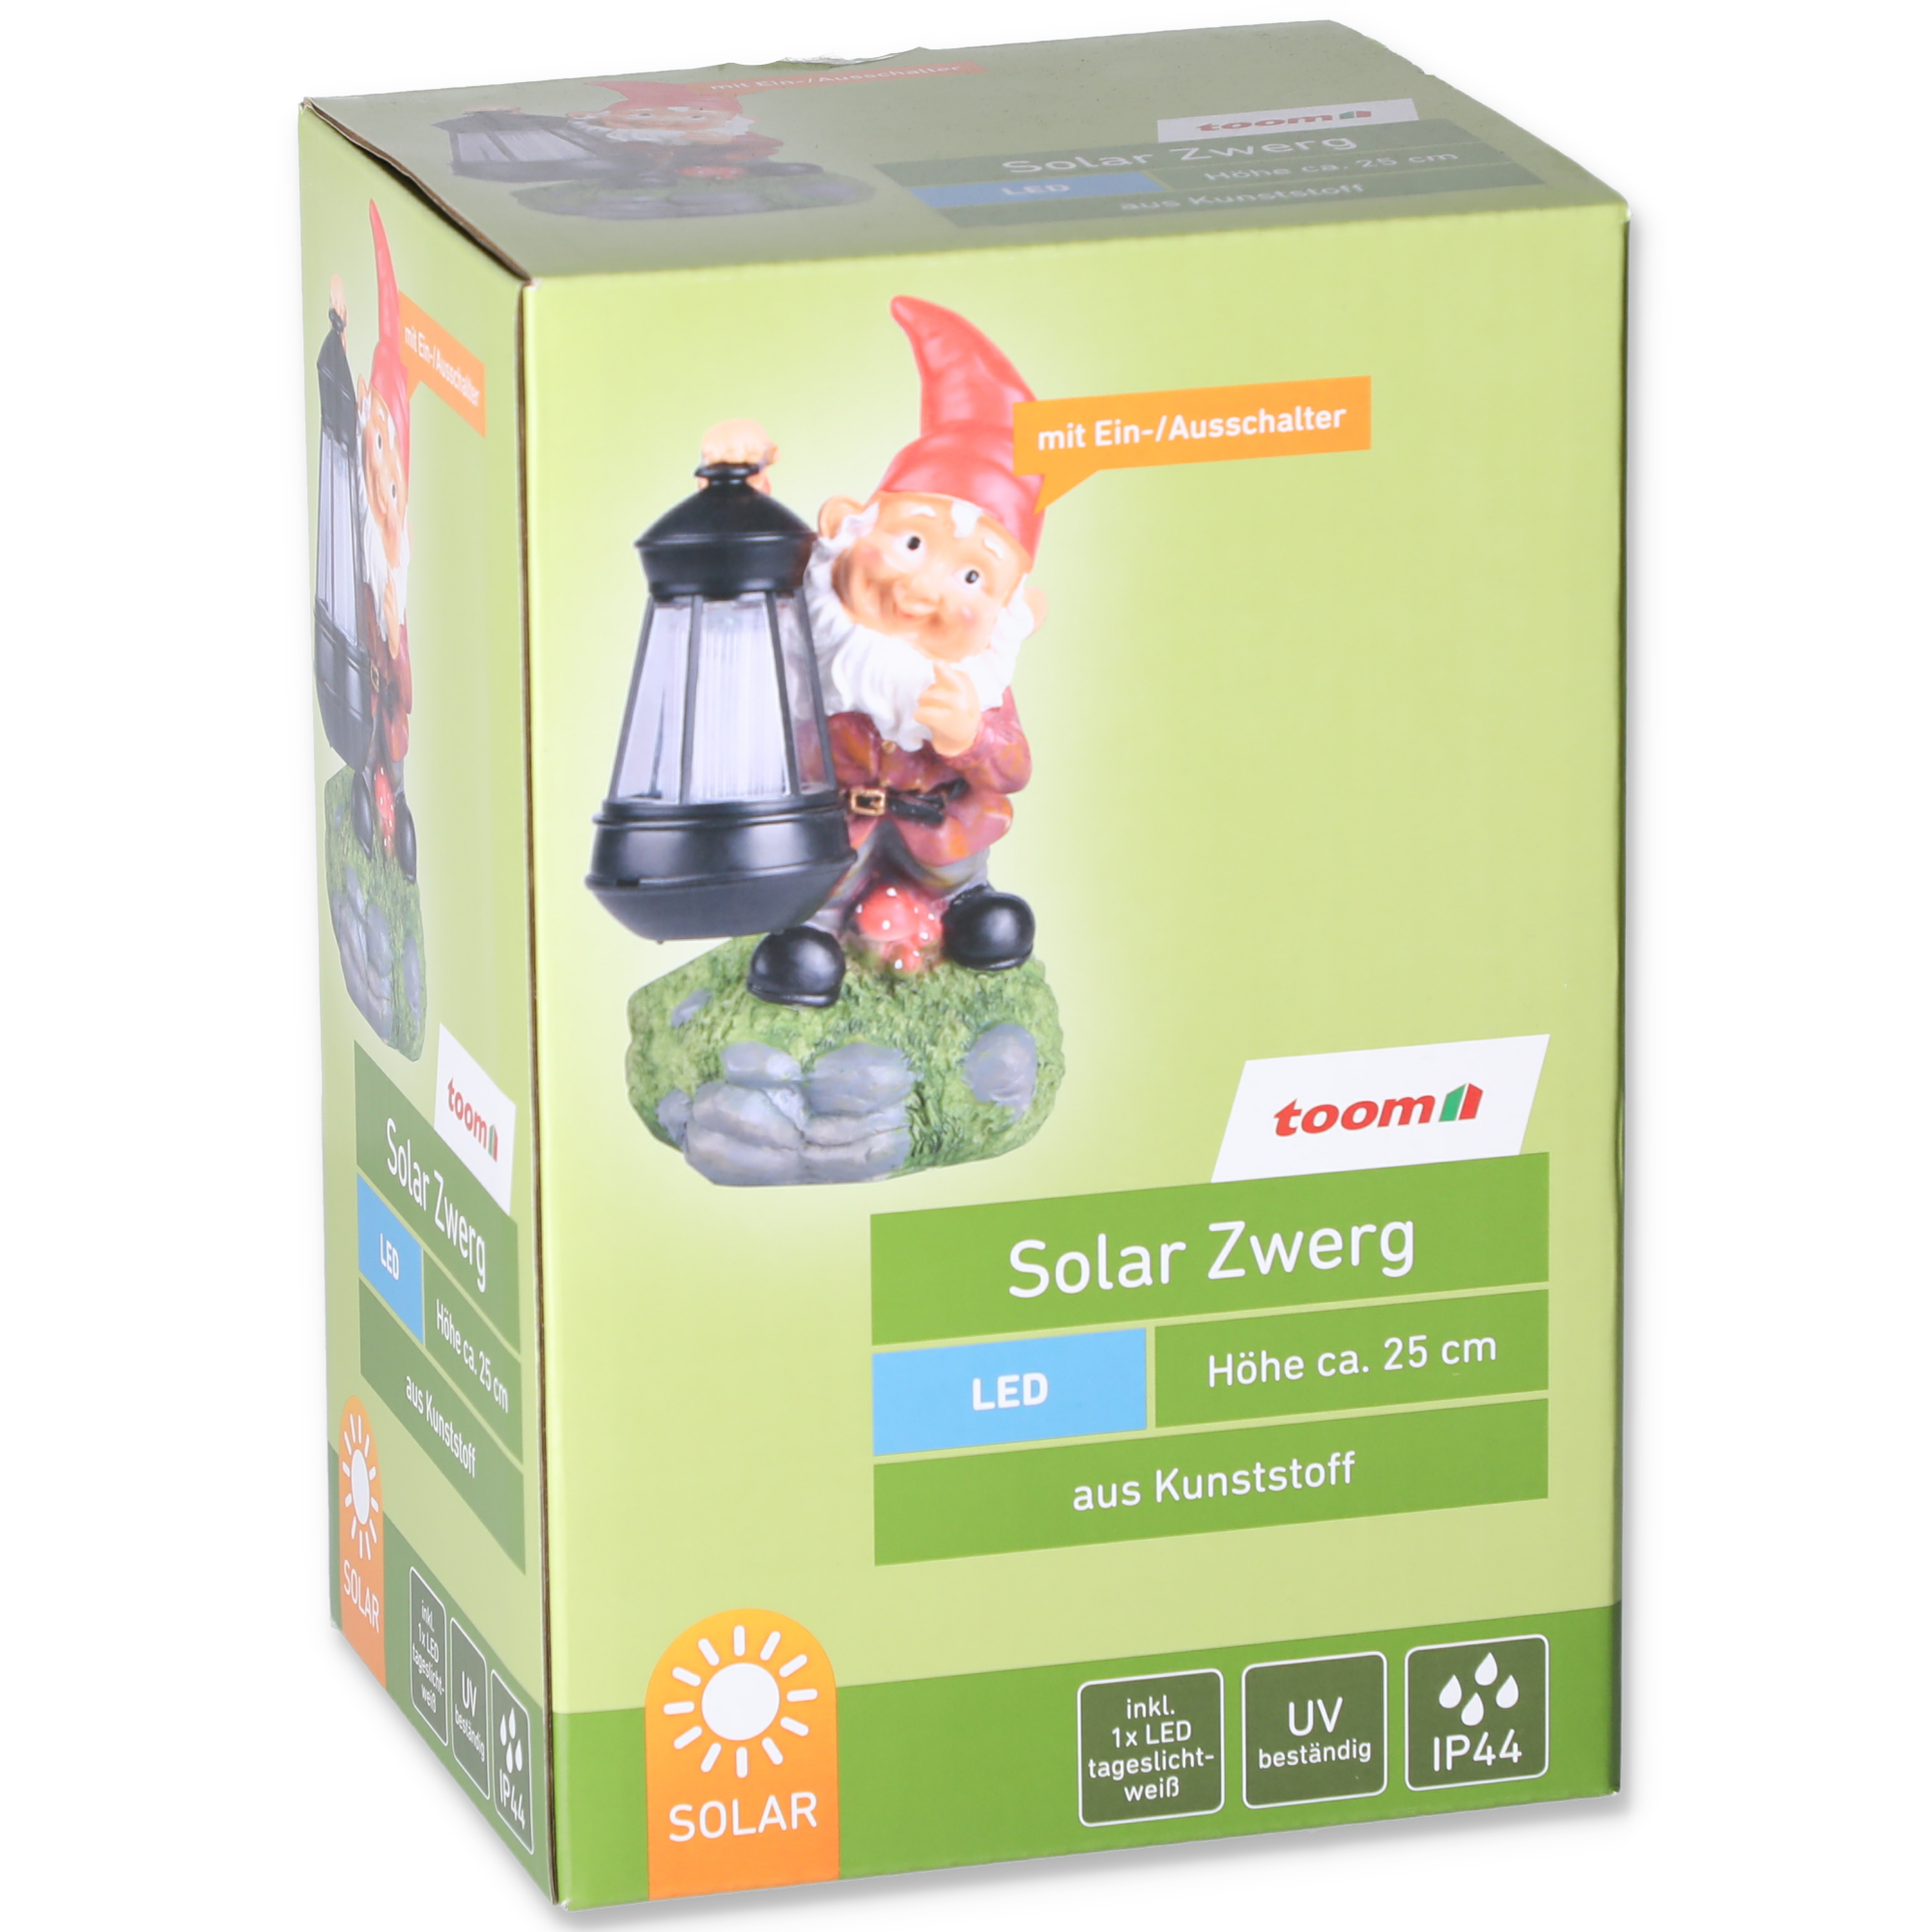 LED-Solarleuchte 'Zwerg' 25 cm + product picture